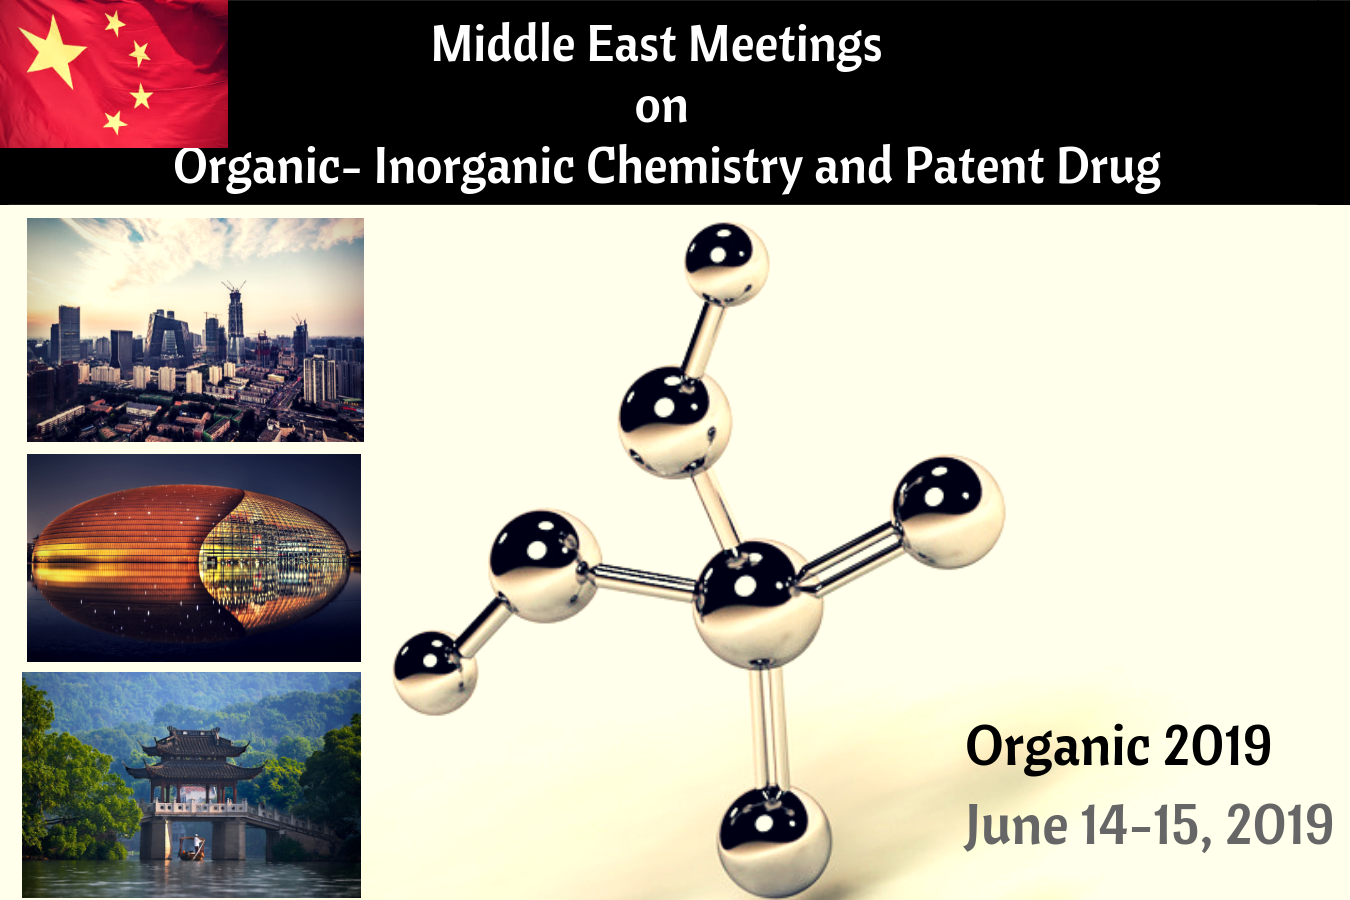 Middle East Meetings on Organic-Inorganic Chemistry & Patent Drug, China, Beijing, China